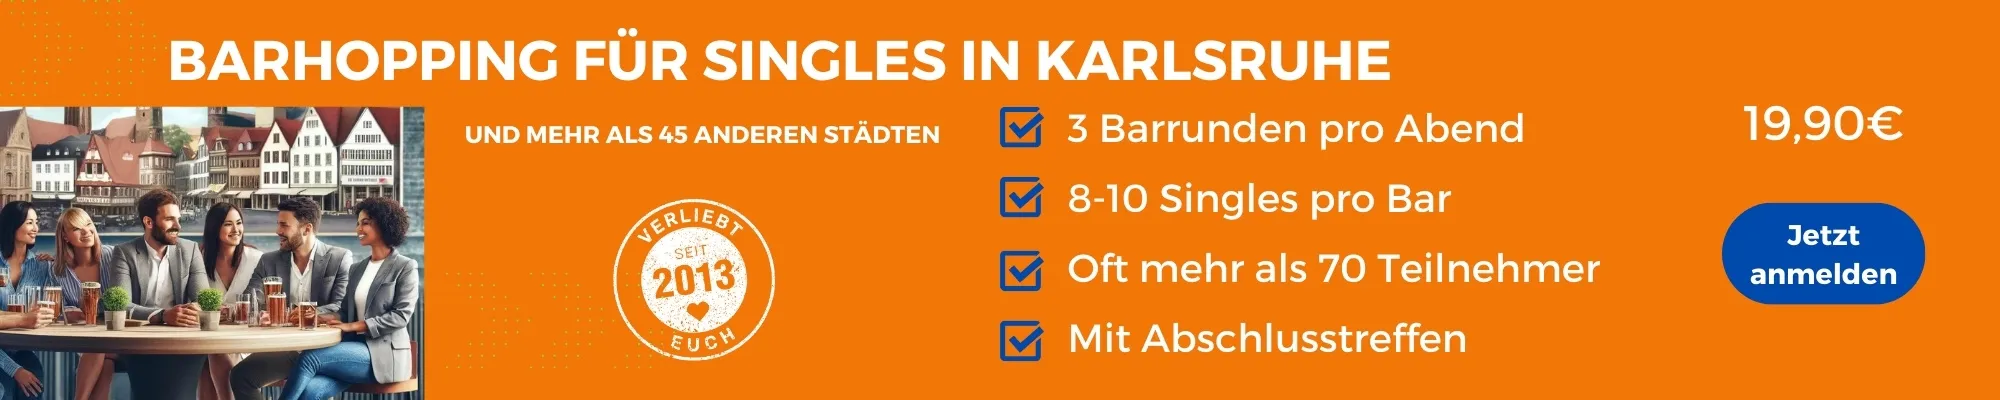 Face to Face Karlsruhe: Barhopping für Singles in Karlsruhe